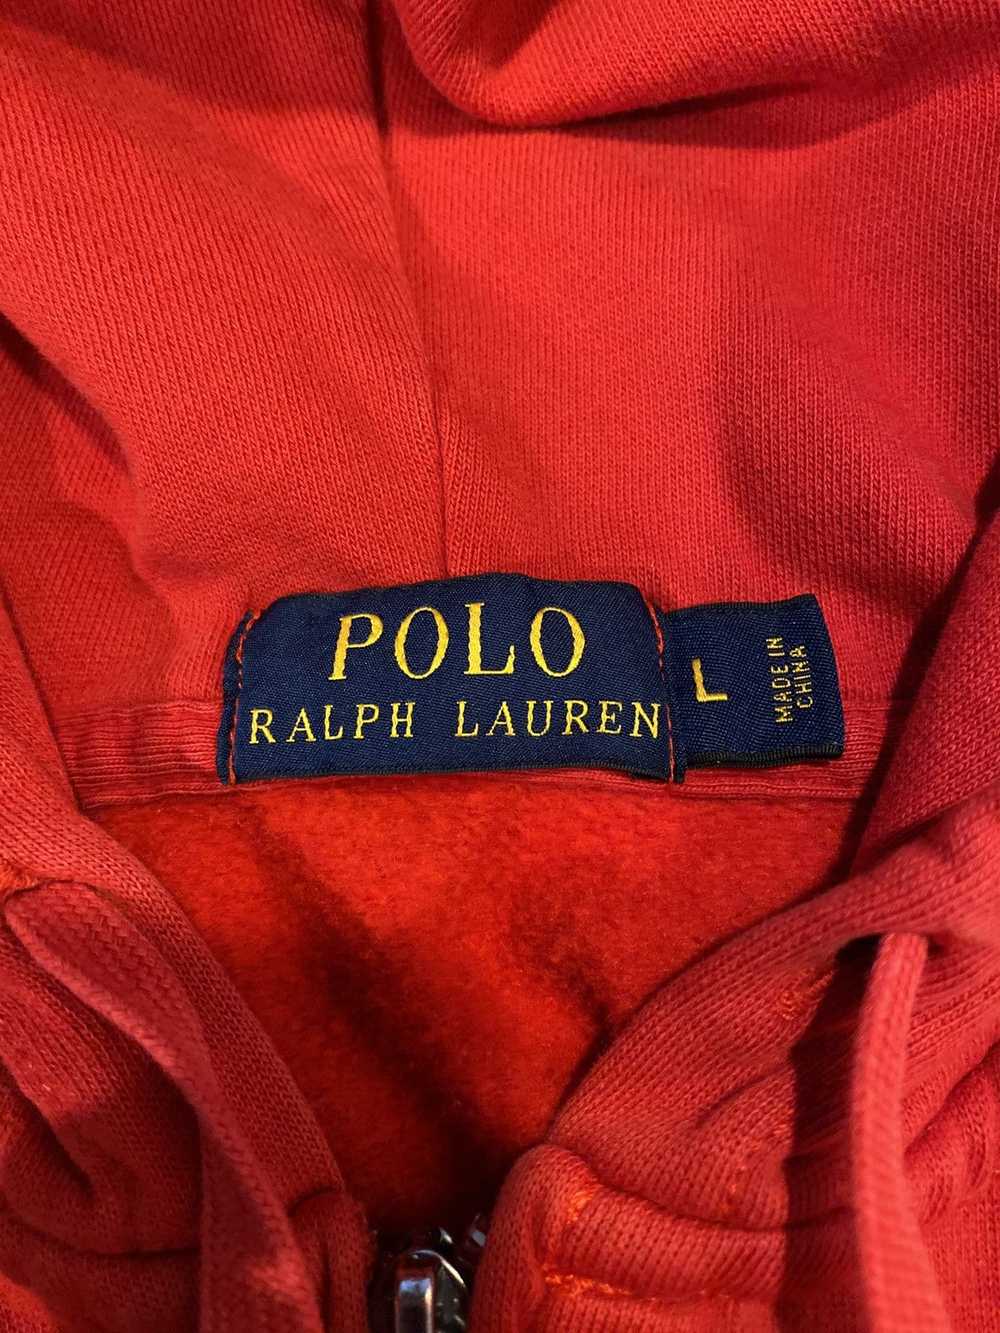 Polo Ralph Lauren [LIKE NEW!] ZIP UP BEAR HOODIE - image 3